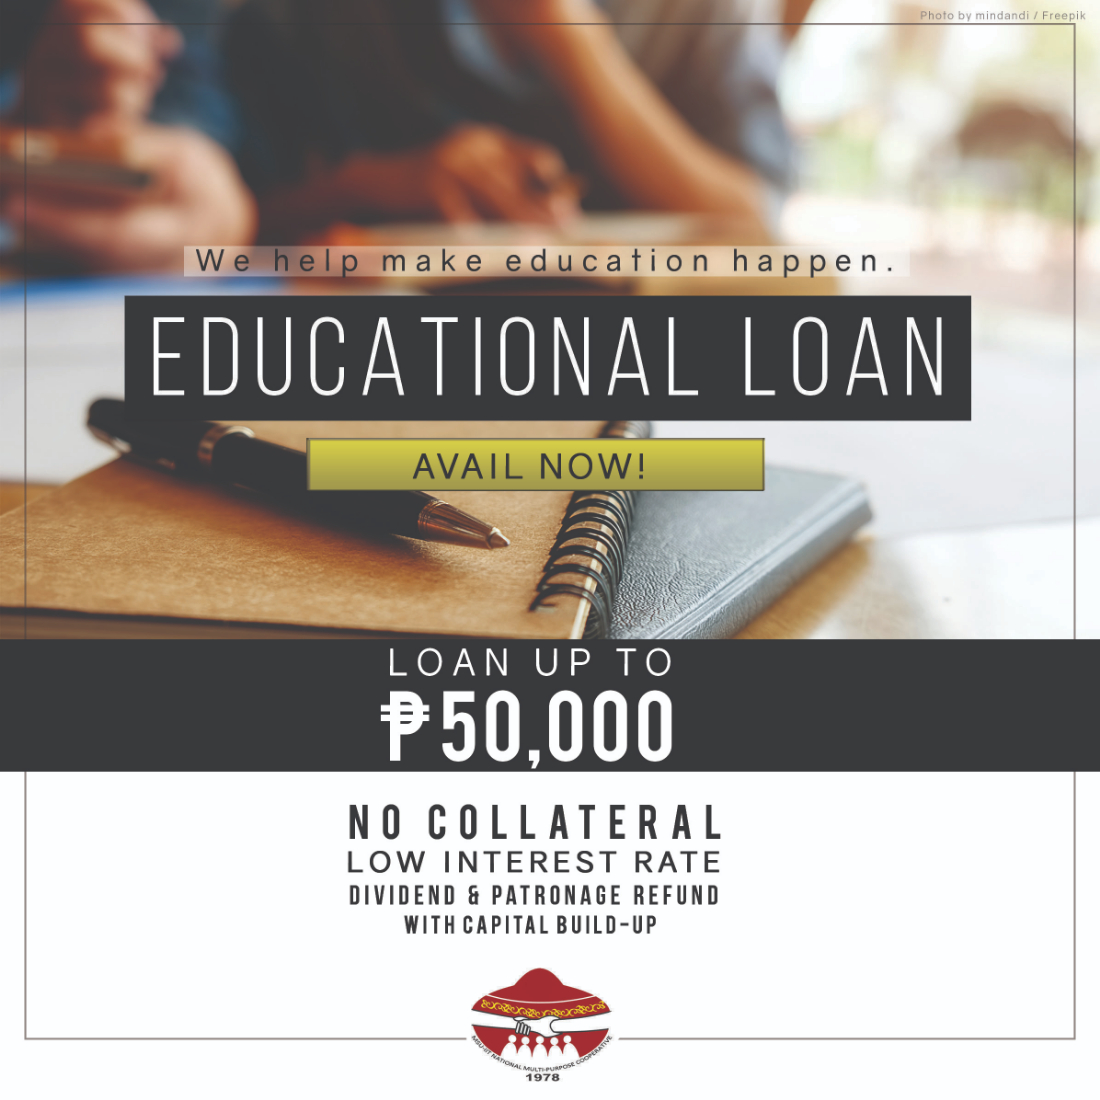 Educational Loan